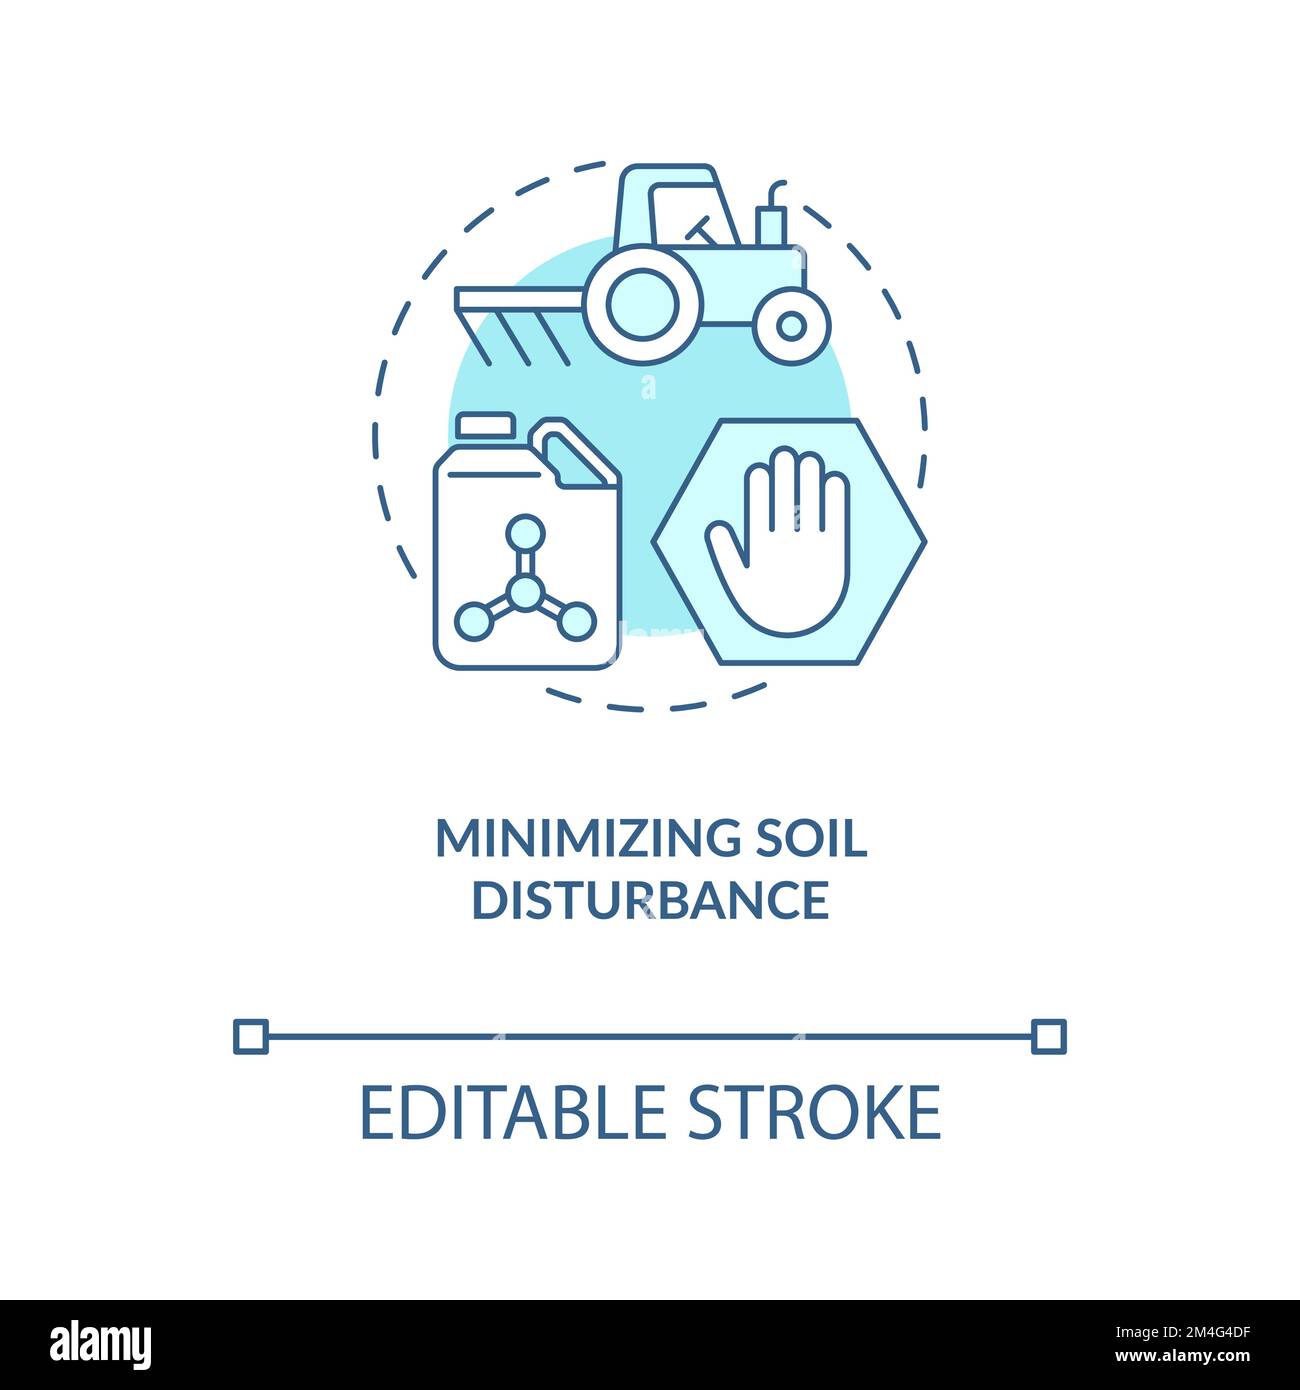 Minimizing soil disturbance turquoise concept icon Stock Vector